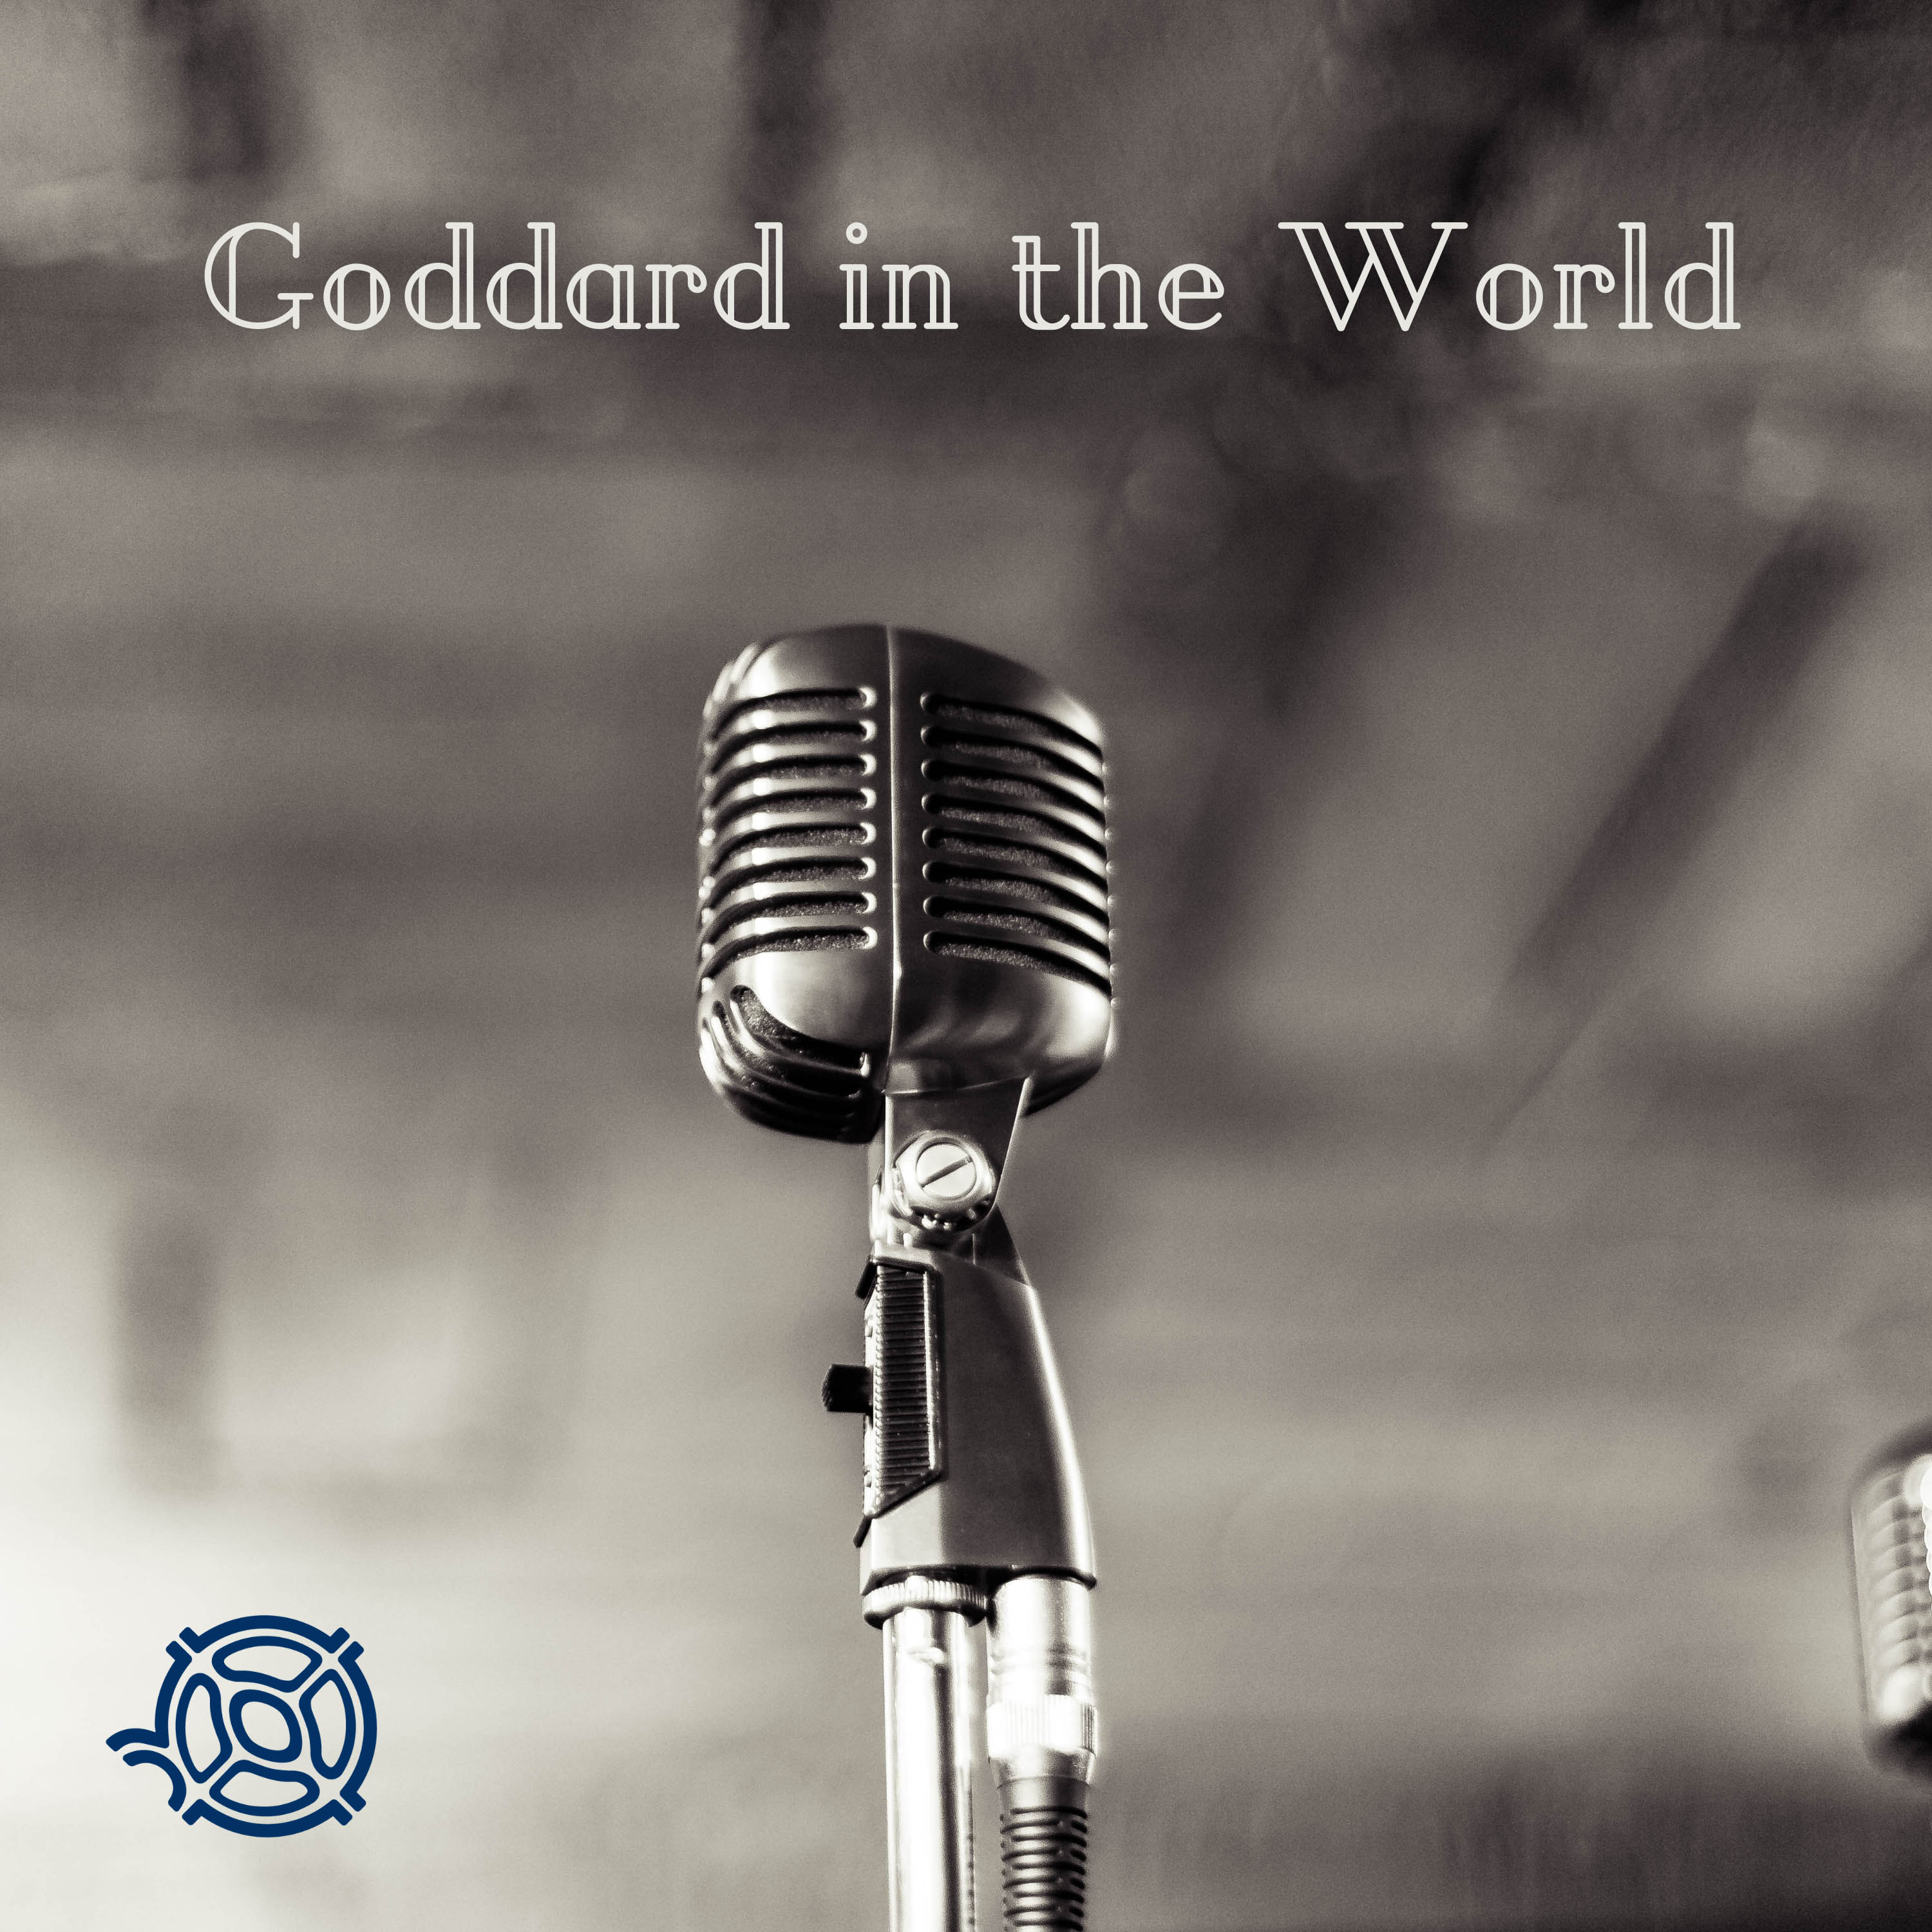 Goddard in the World